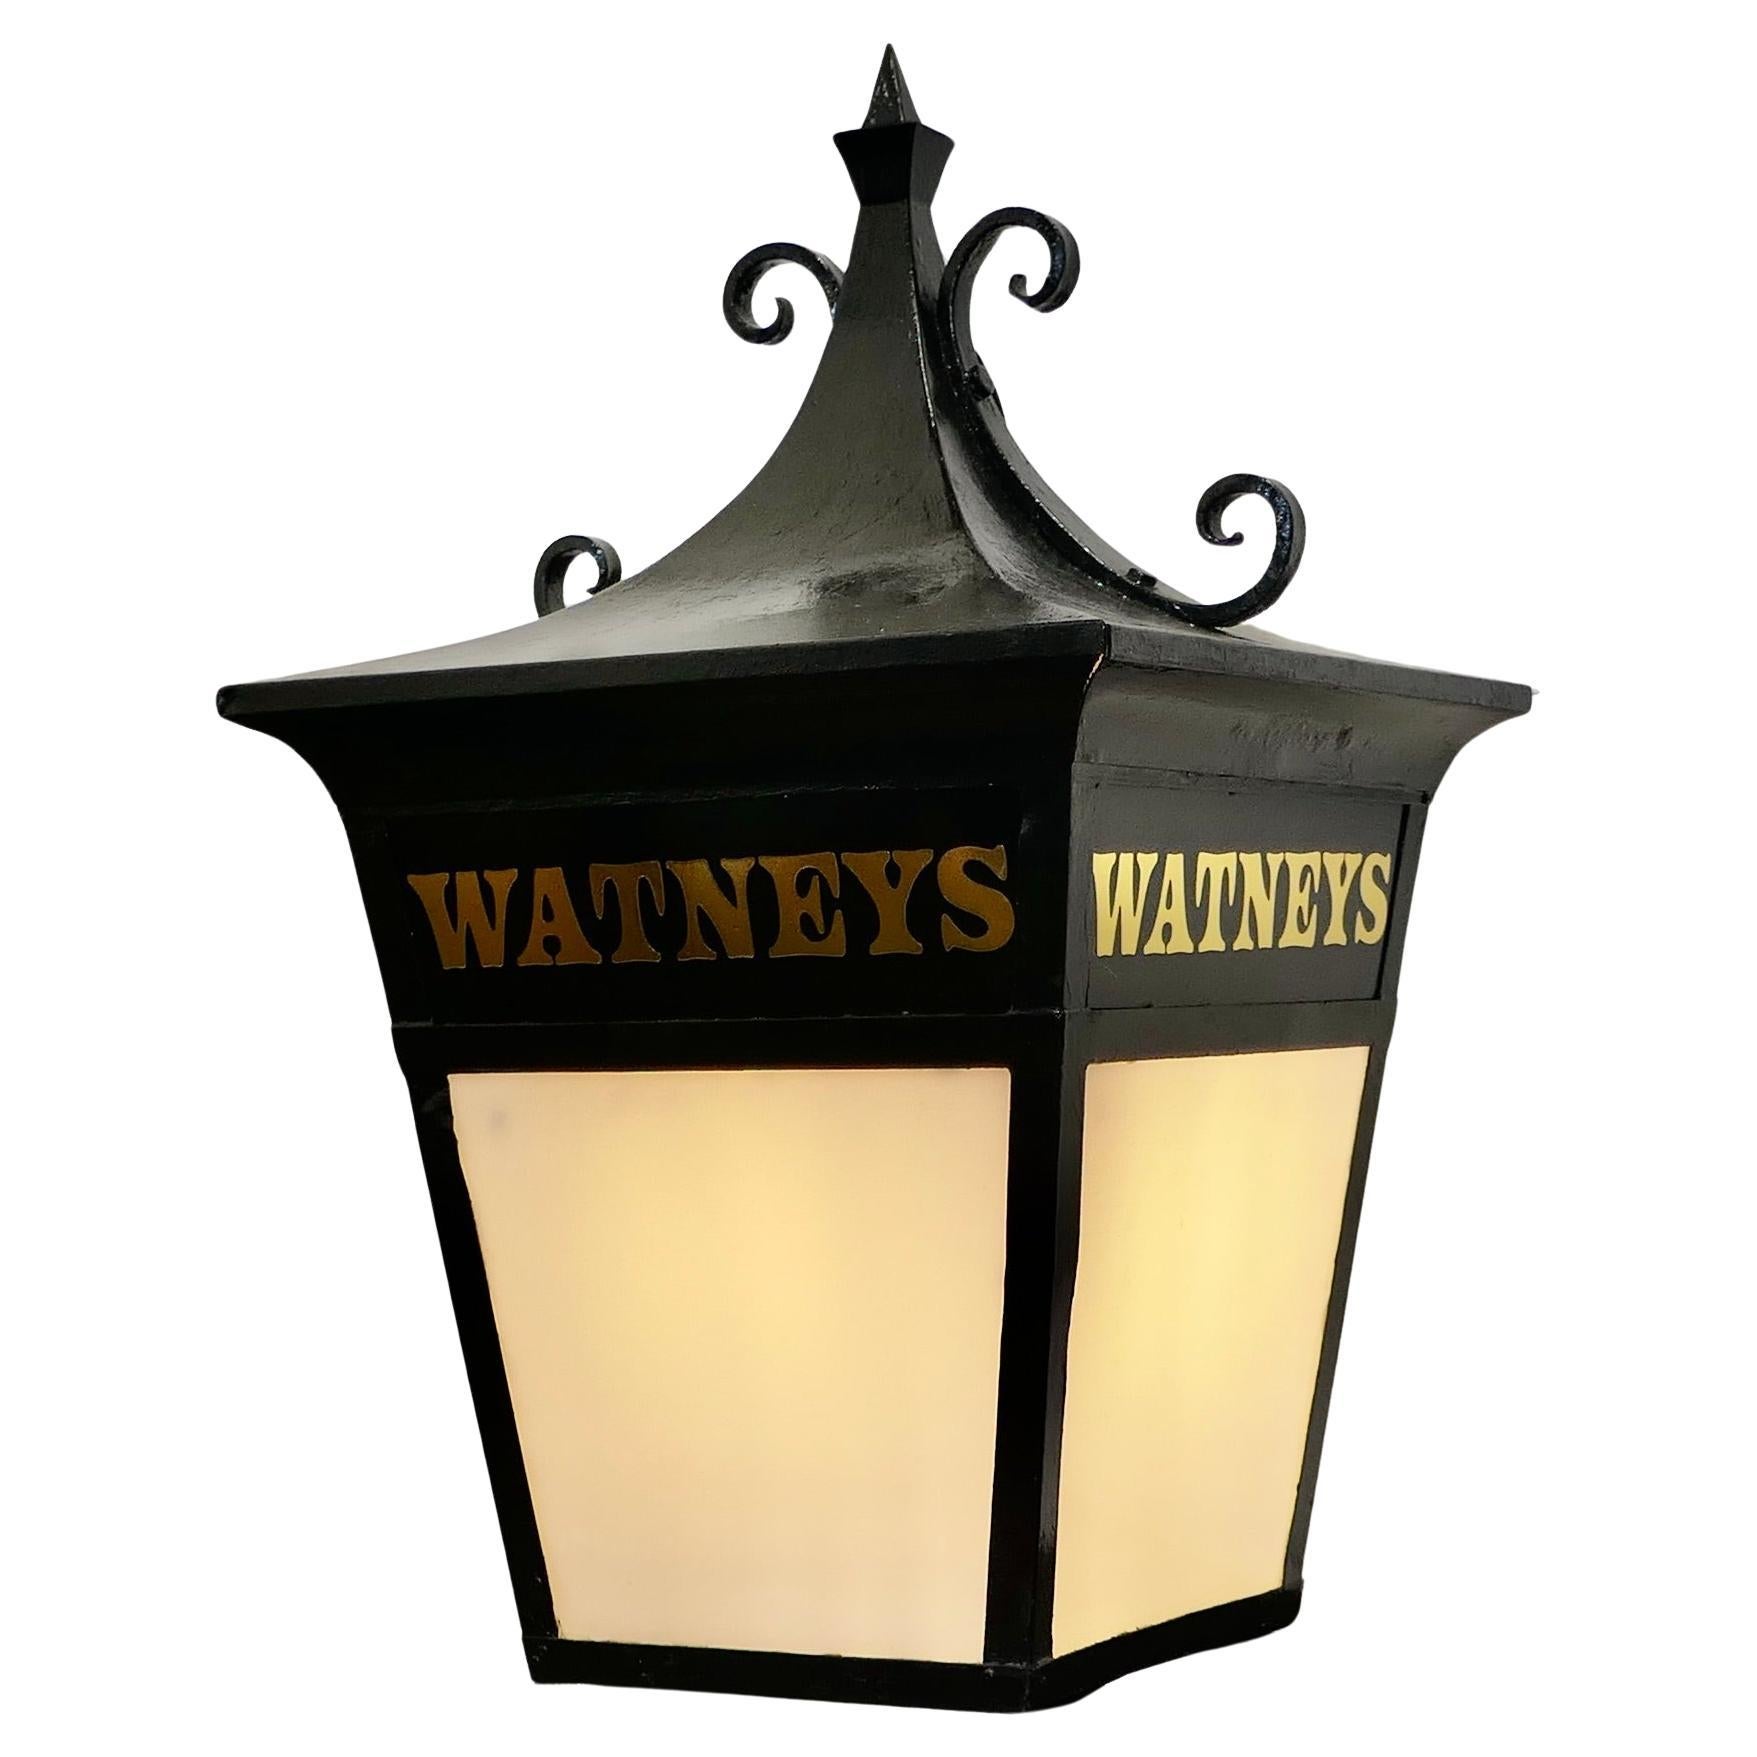 Grande lanterne de pub Watneys  Une pièce superbe 